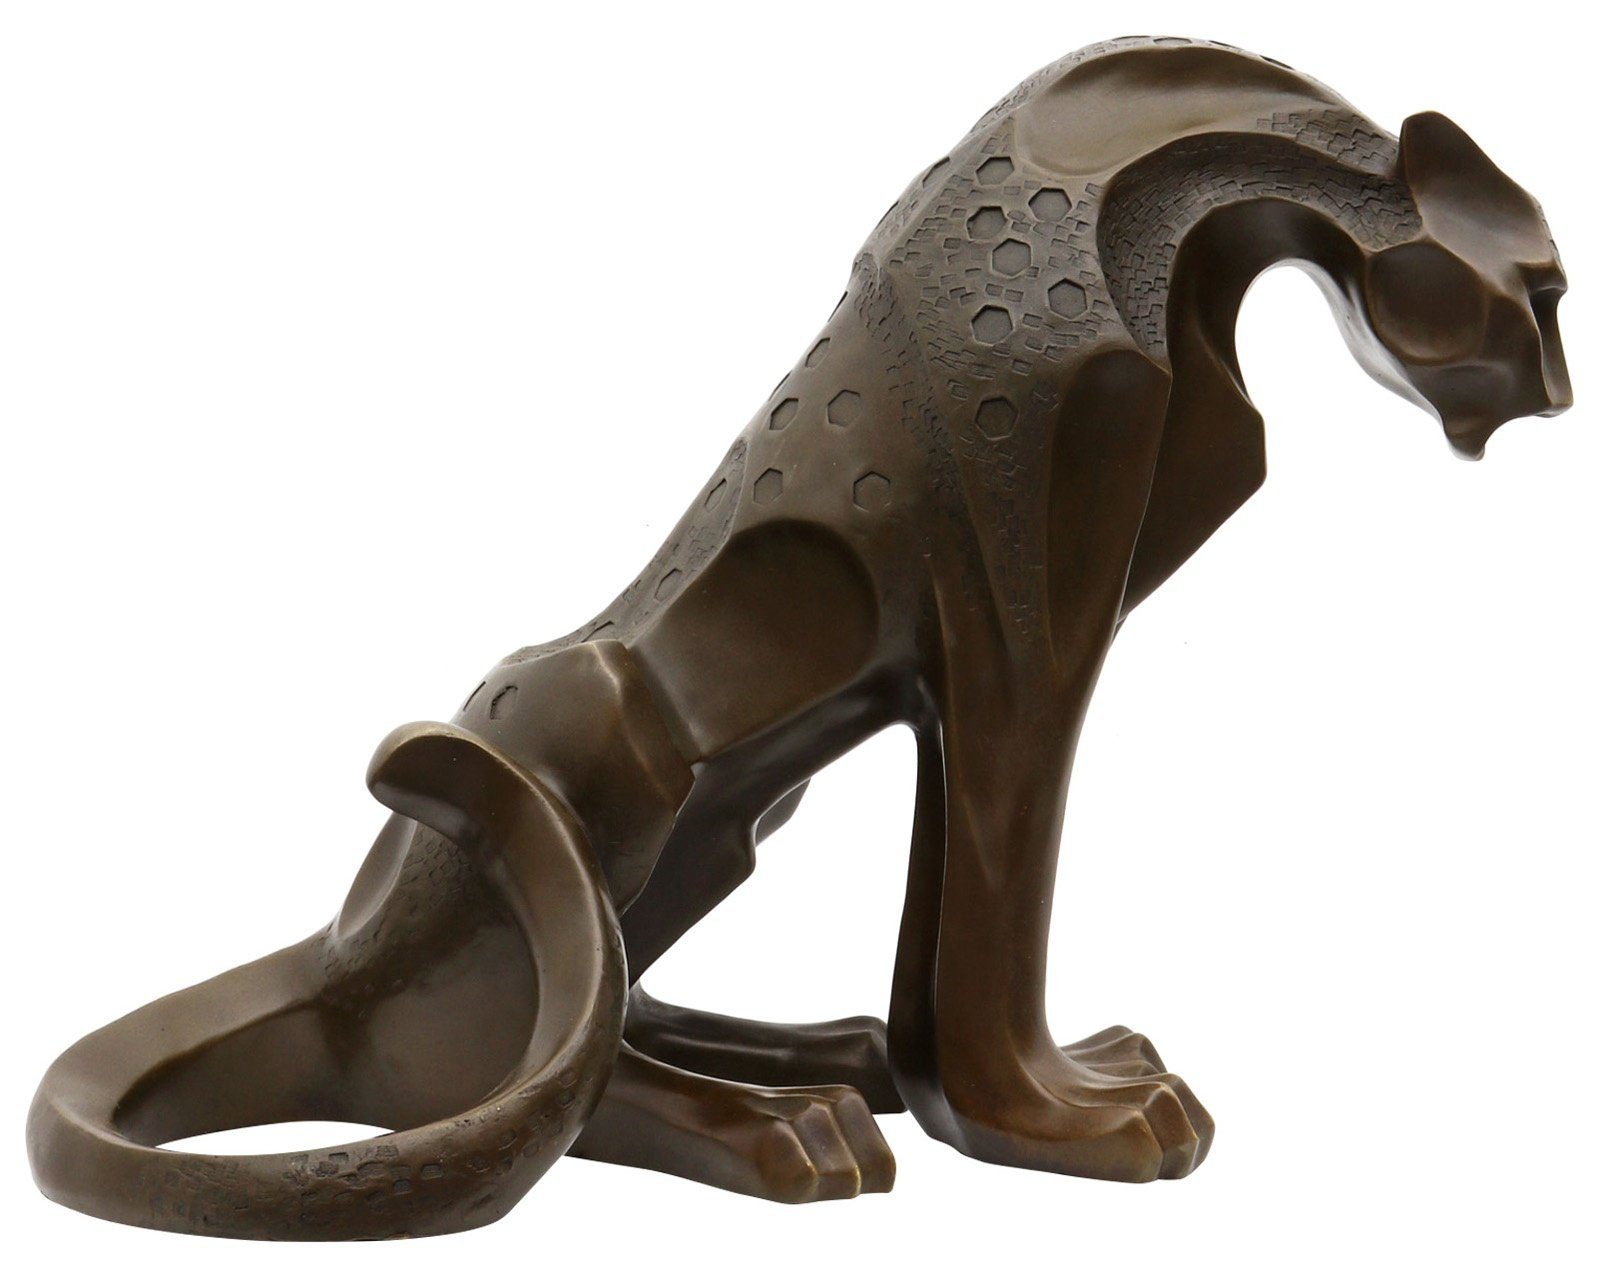 Aubaho Skulptur Figur Statue Leopard R Antik-Stil Bronzeskulptur Gepard Bronze Panther